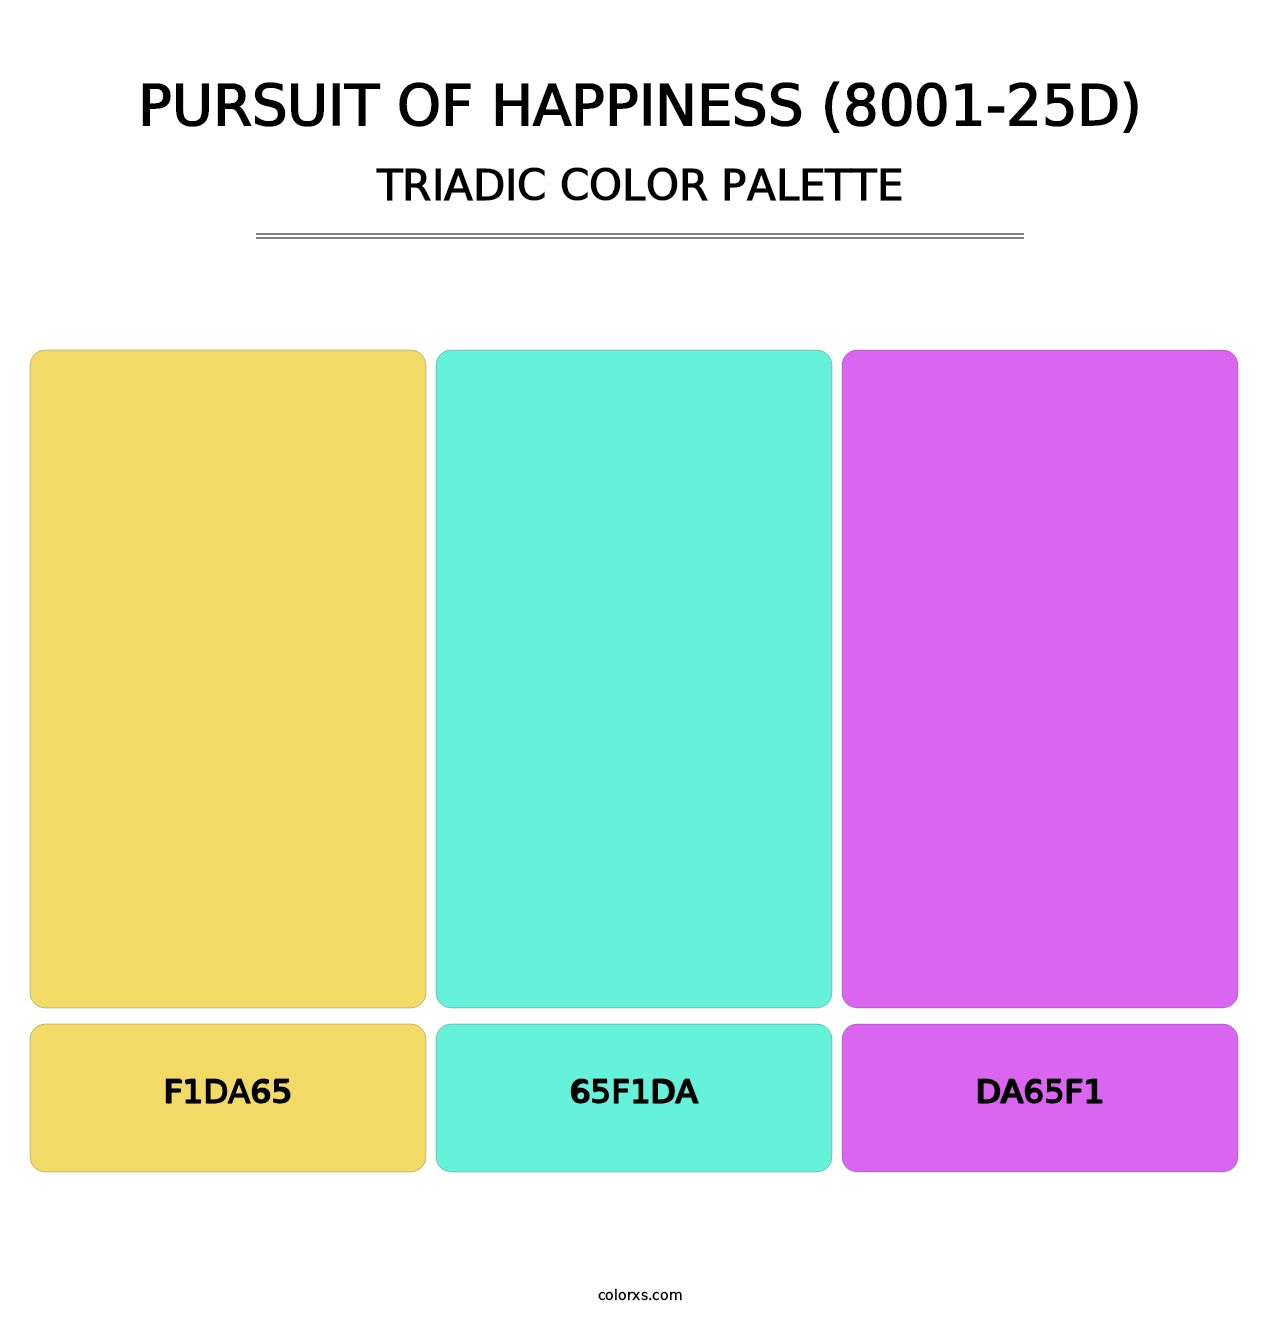 Pursuit of Happiness (8001-25D) - Triadic Color Palette